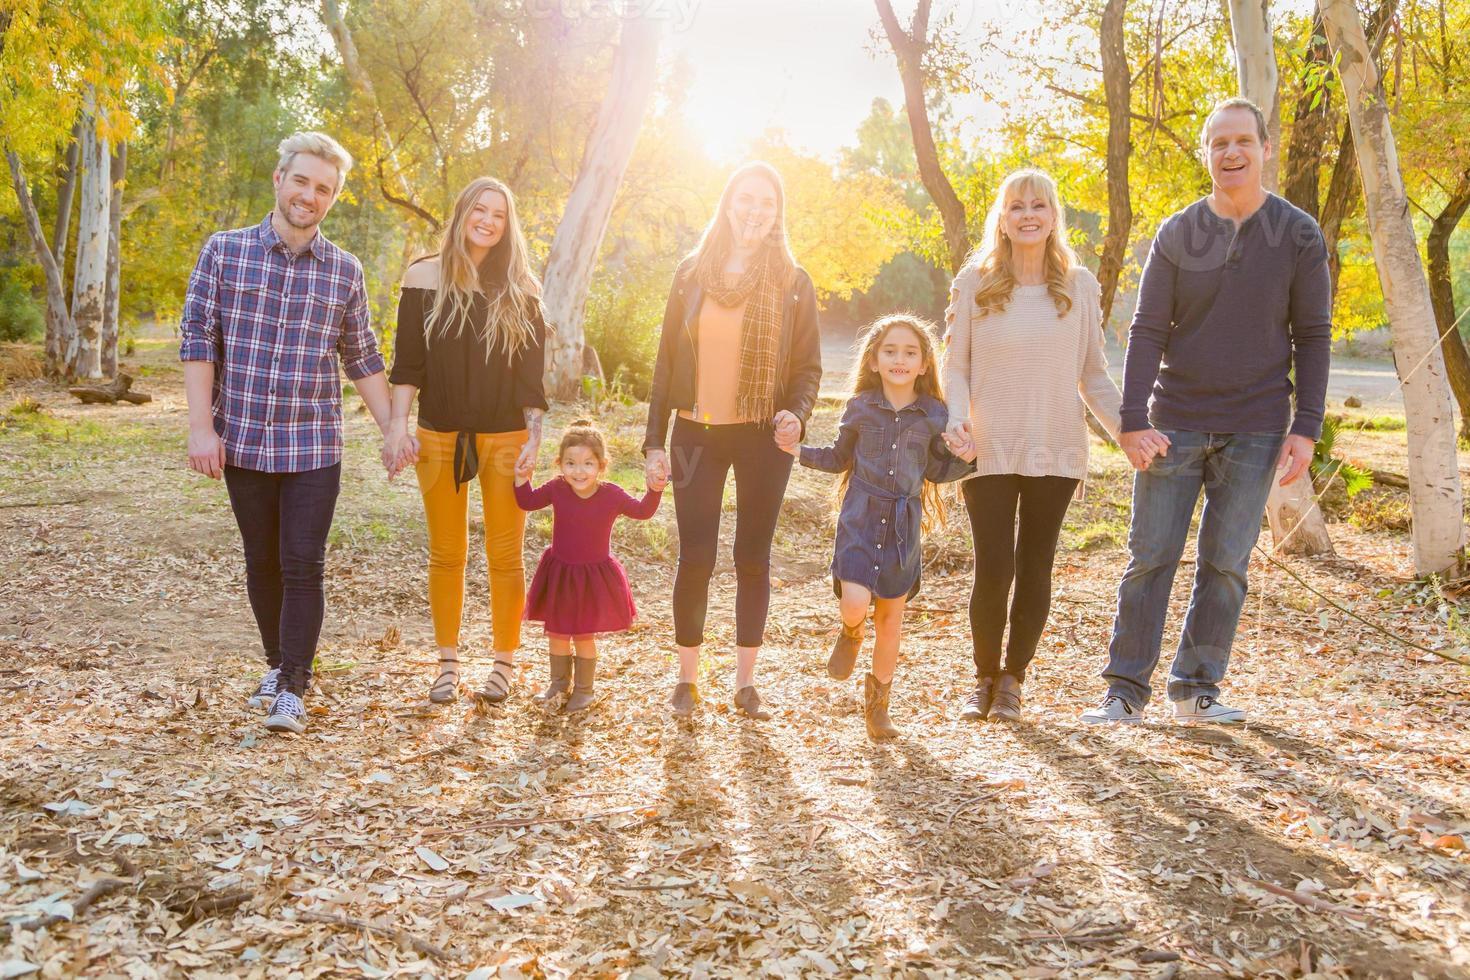 Multigenerational Mixed Race Family Portrait Outdoors photo